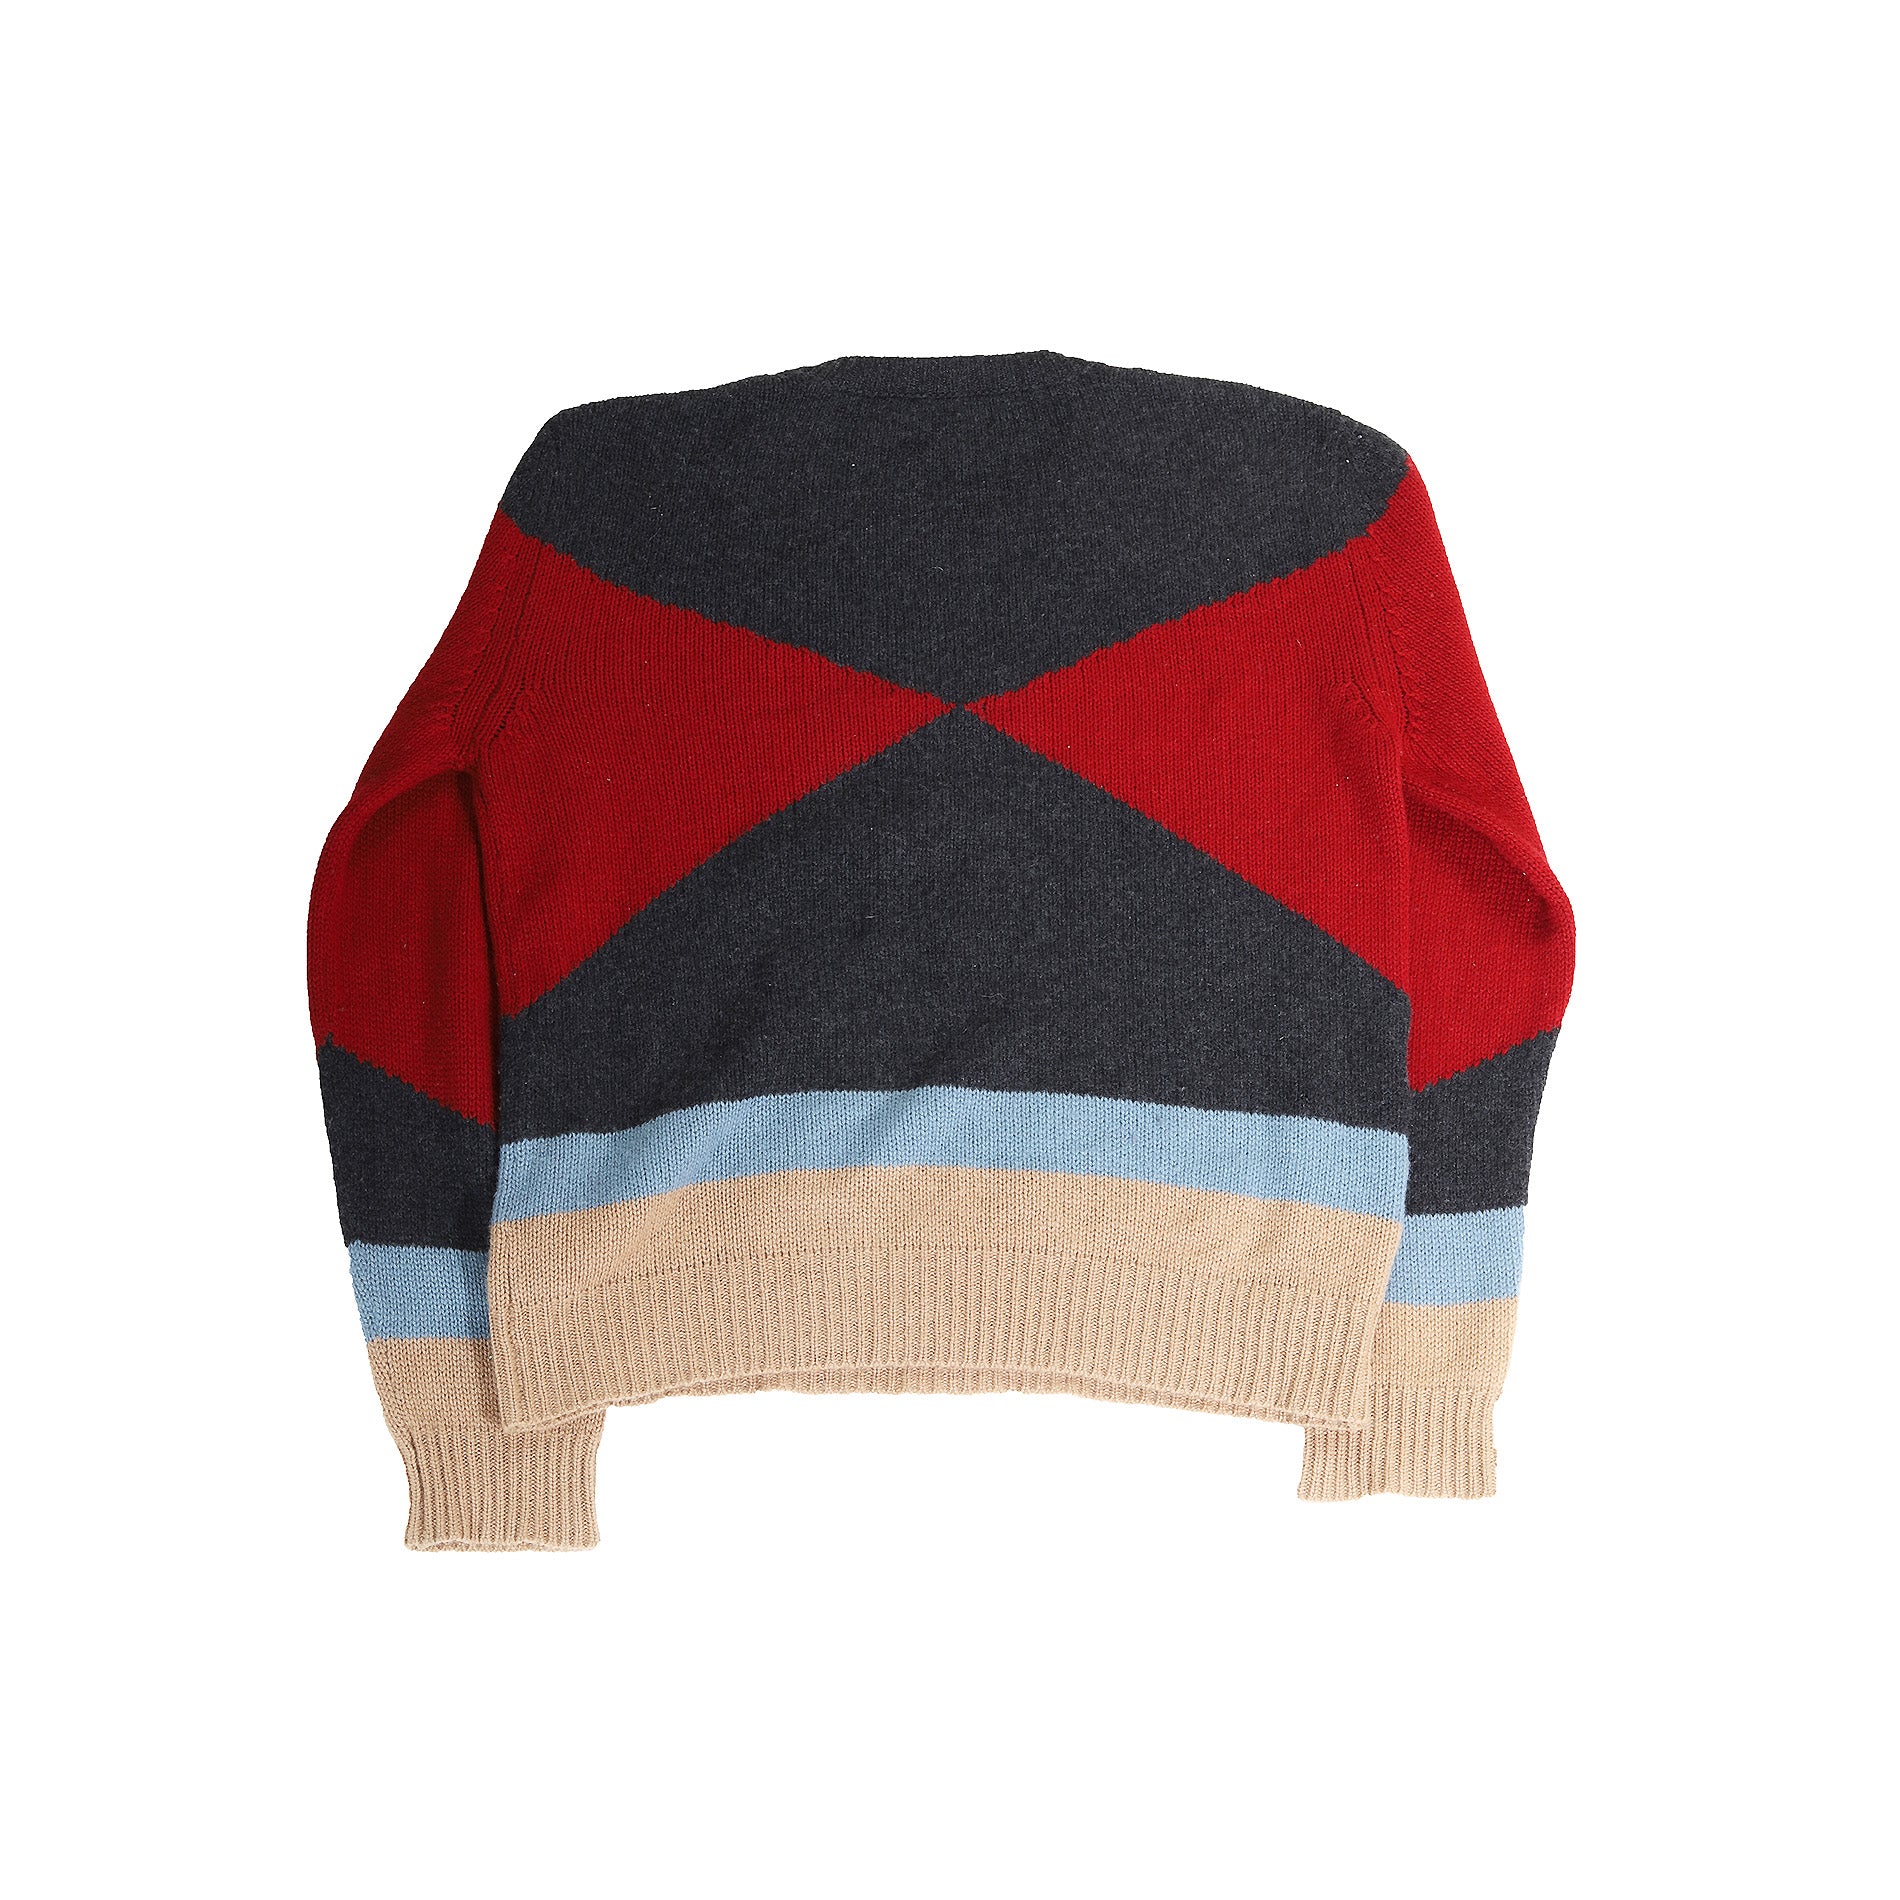 Valentino AW14 Geomtric Cashmere Knit Sweater